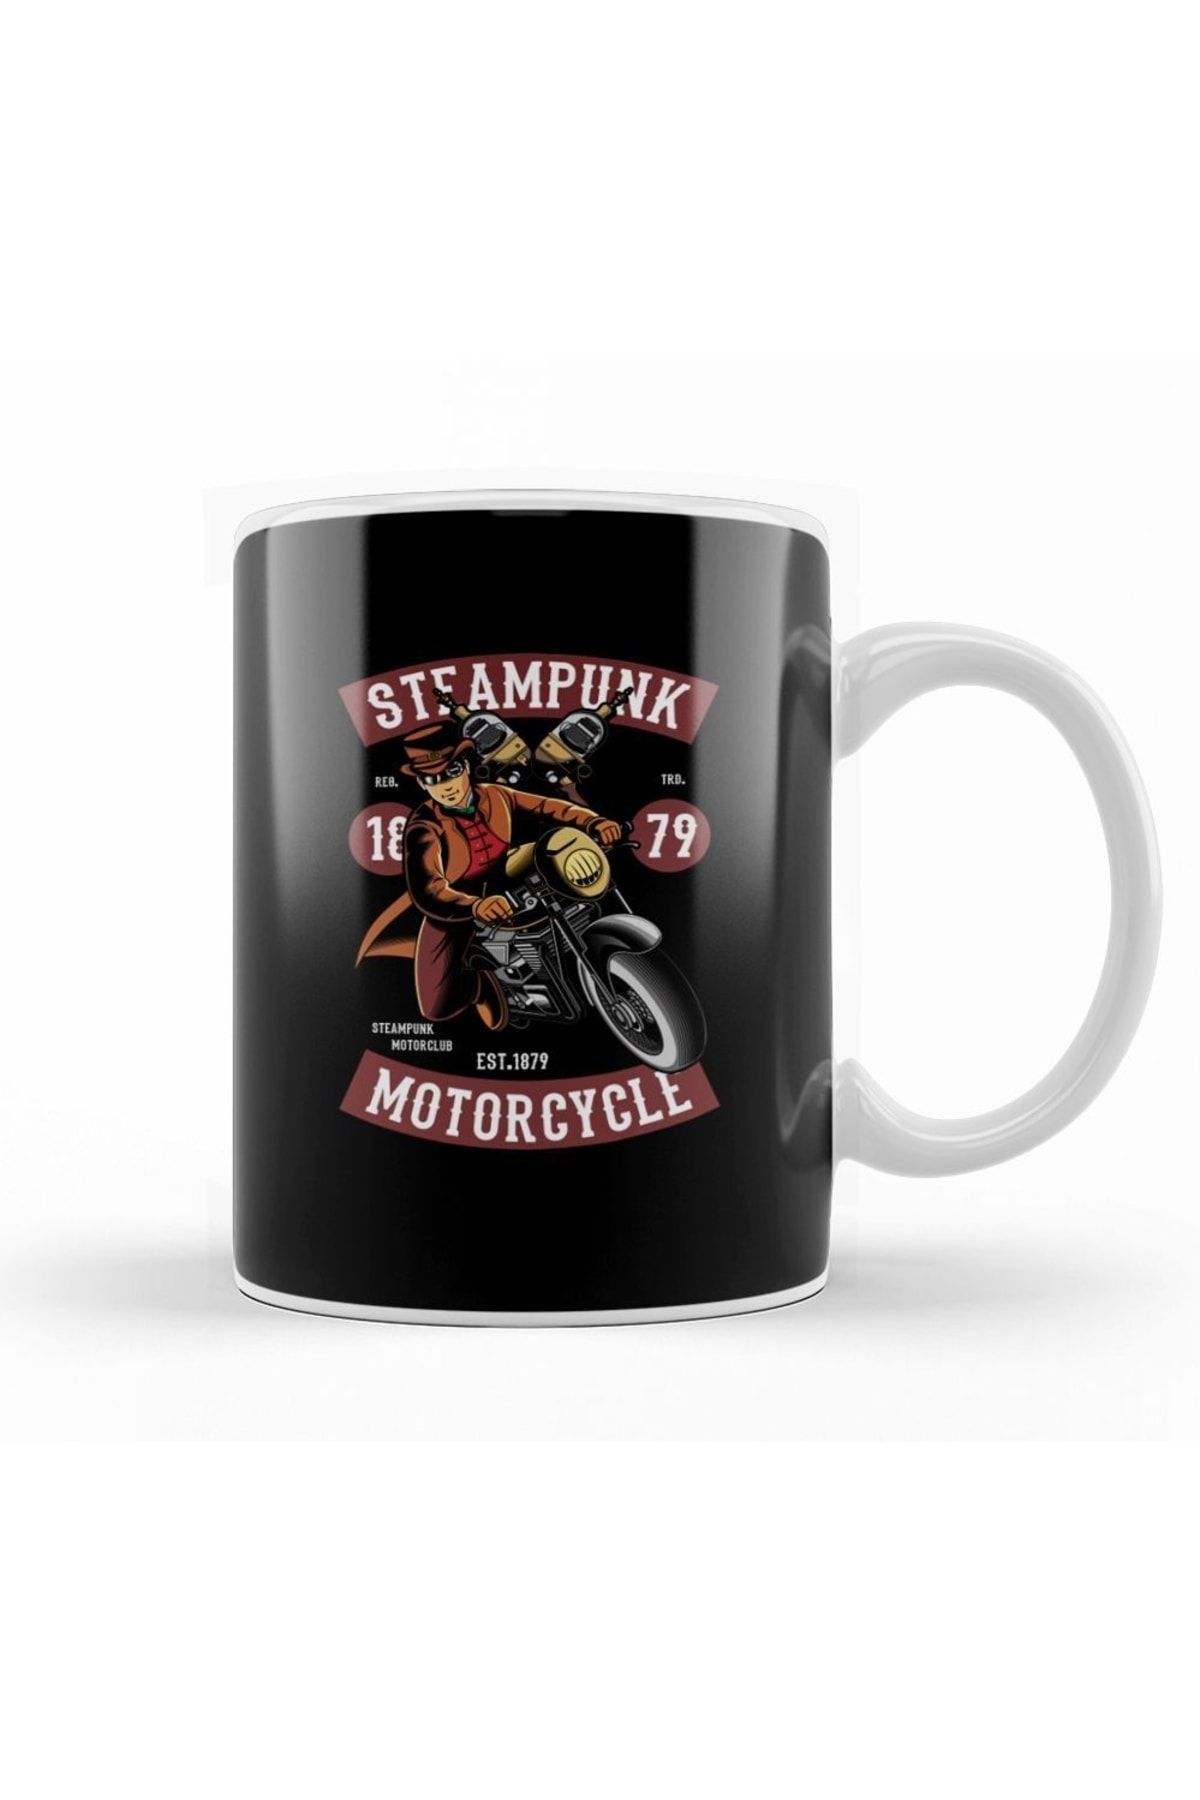 Humuts Steampunk Motorcycle Kupa Bardak Porselen